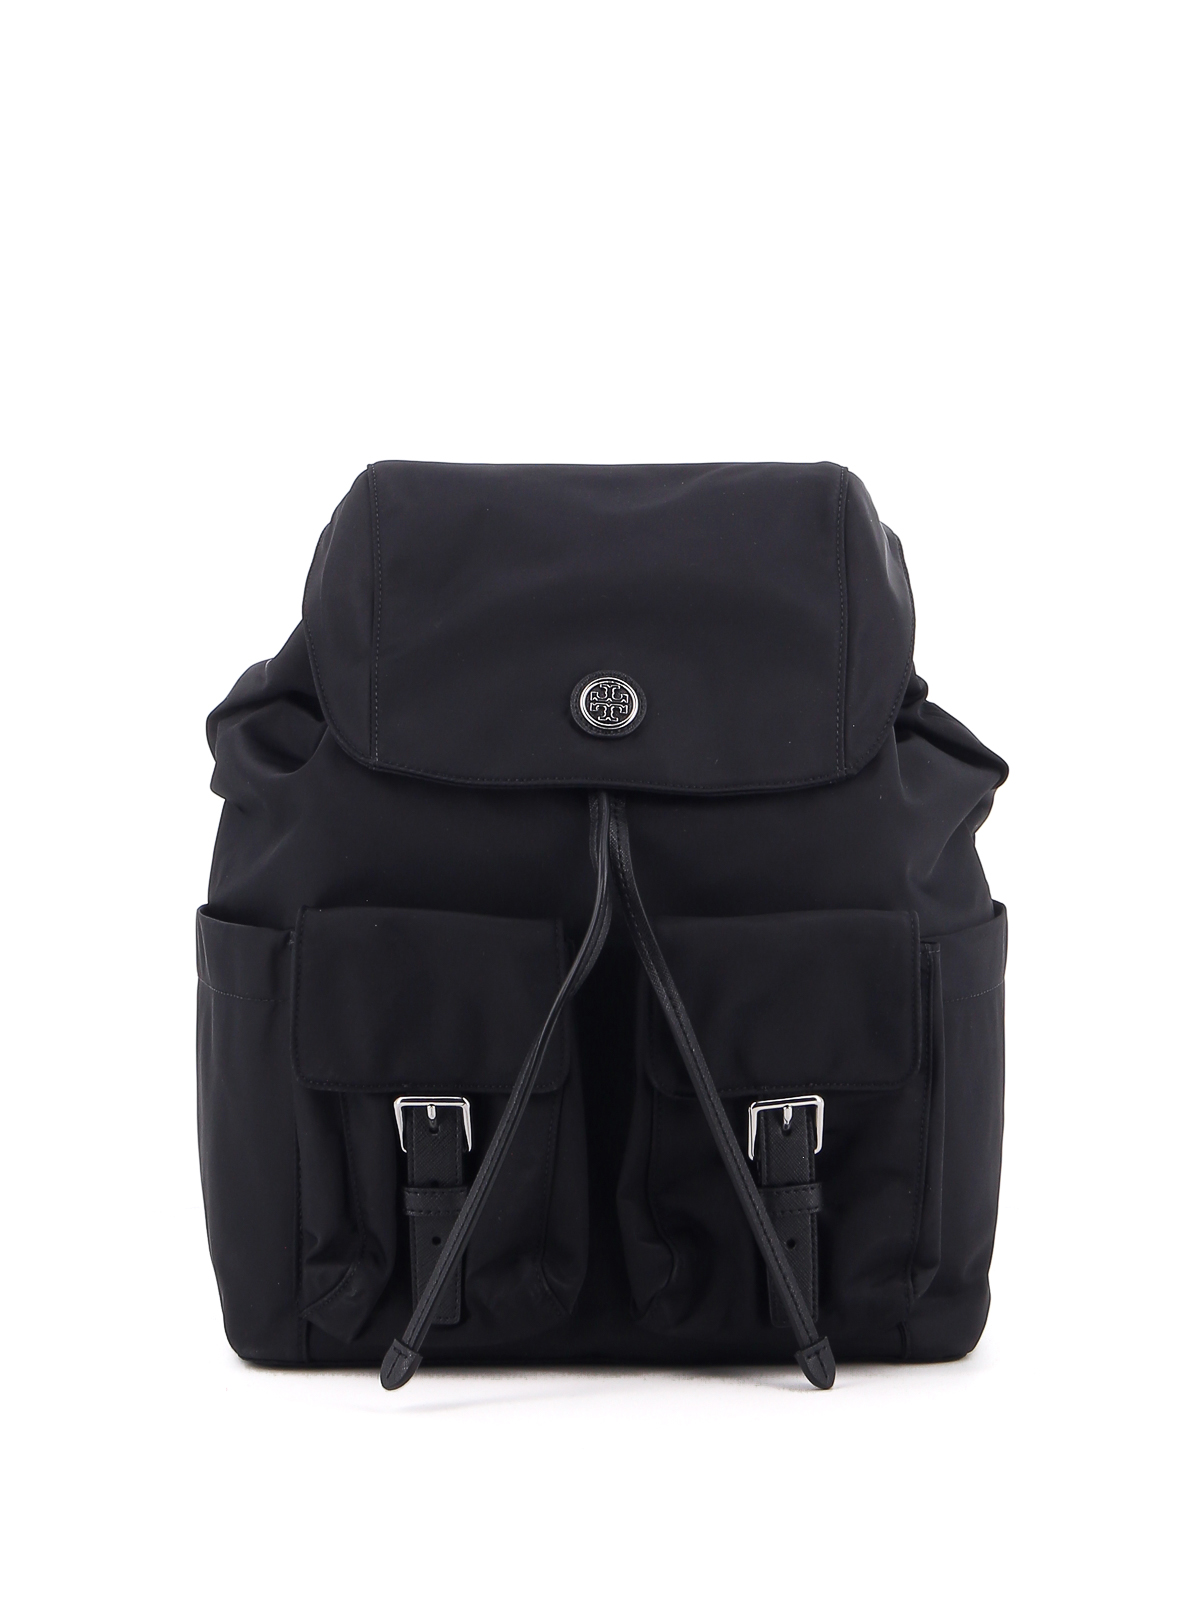 Backpacks Tory Burch - Nylon backpack - 85061001 | Shop online at